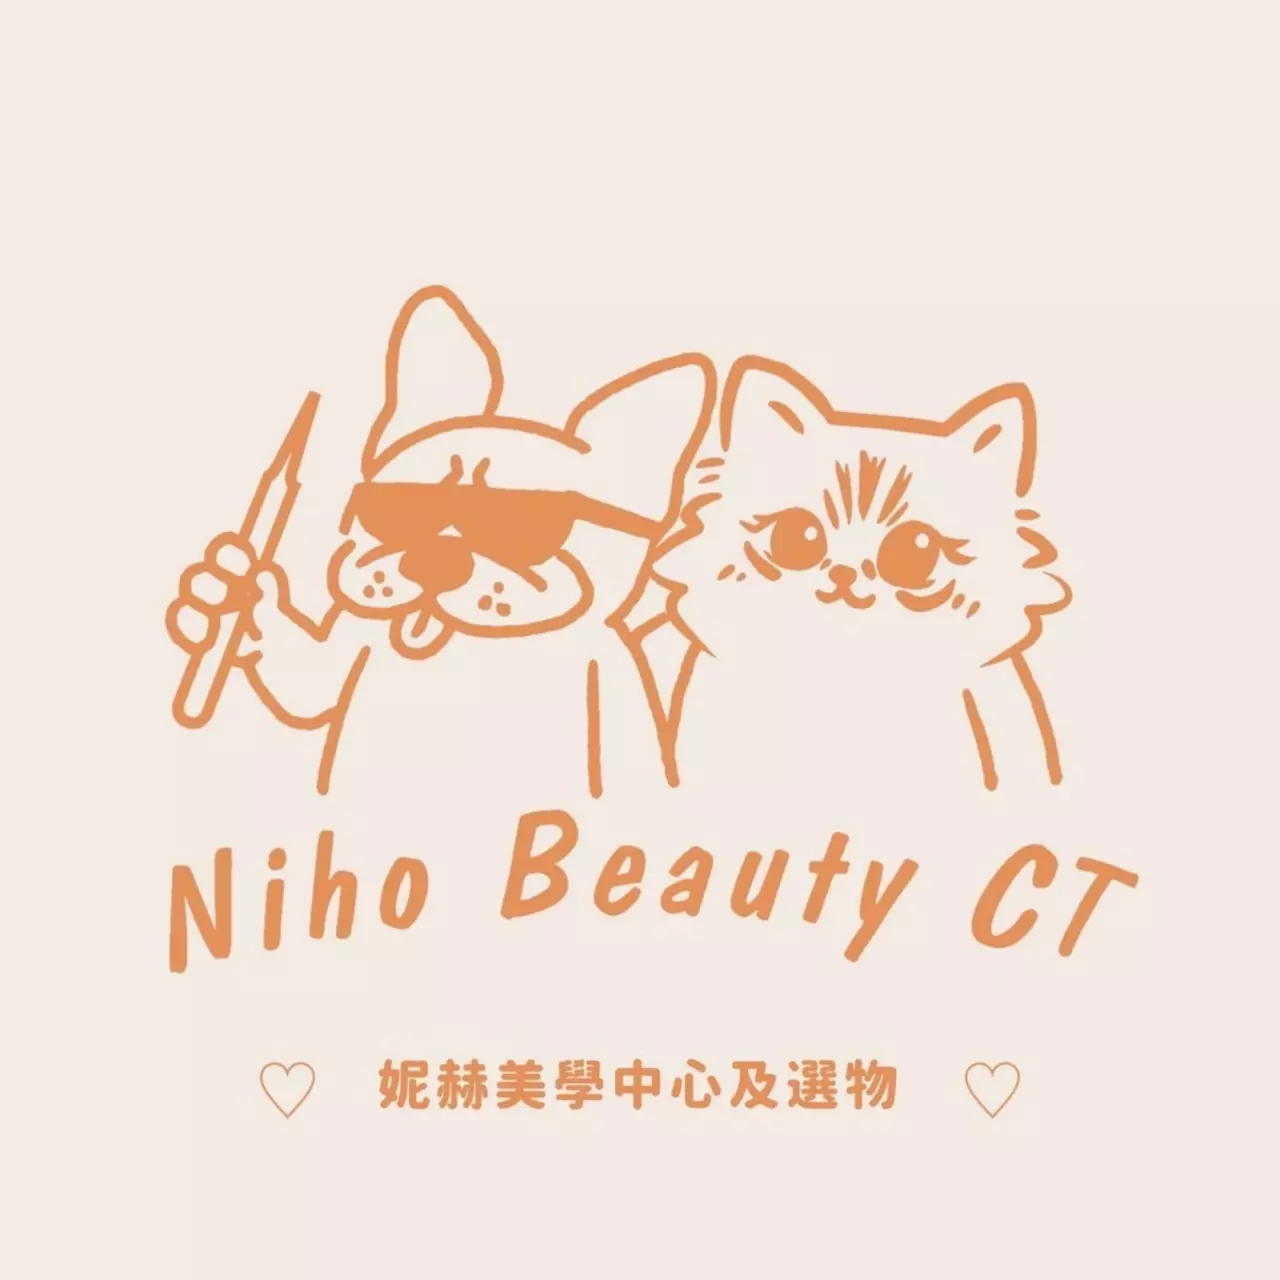 Niho Beauty CT 妮赫美學中心&選物｜豐傑特約商家(質感美學精選店家)